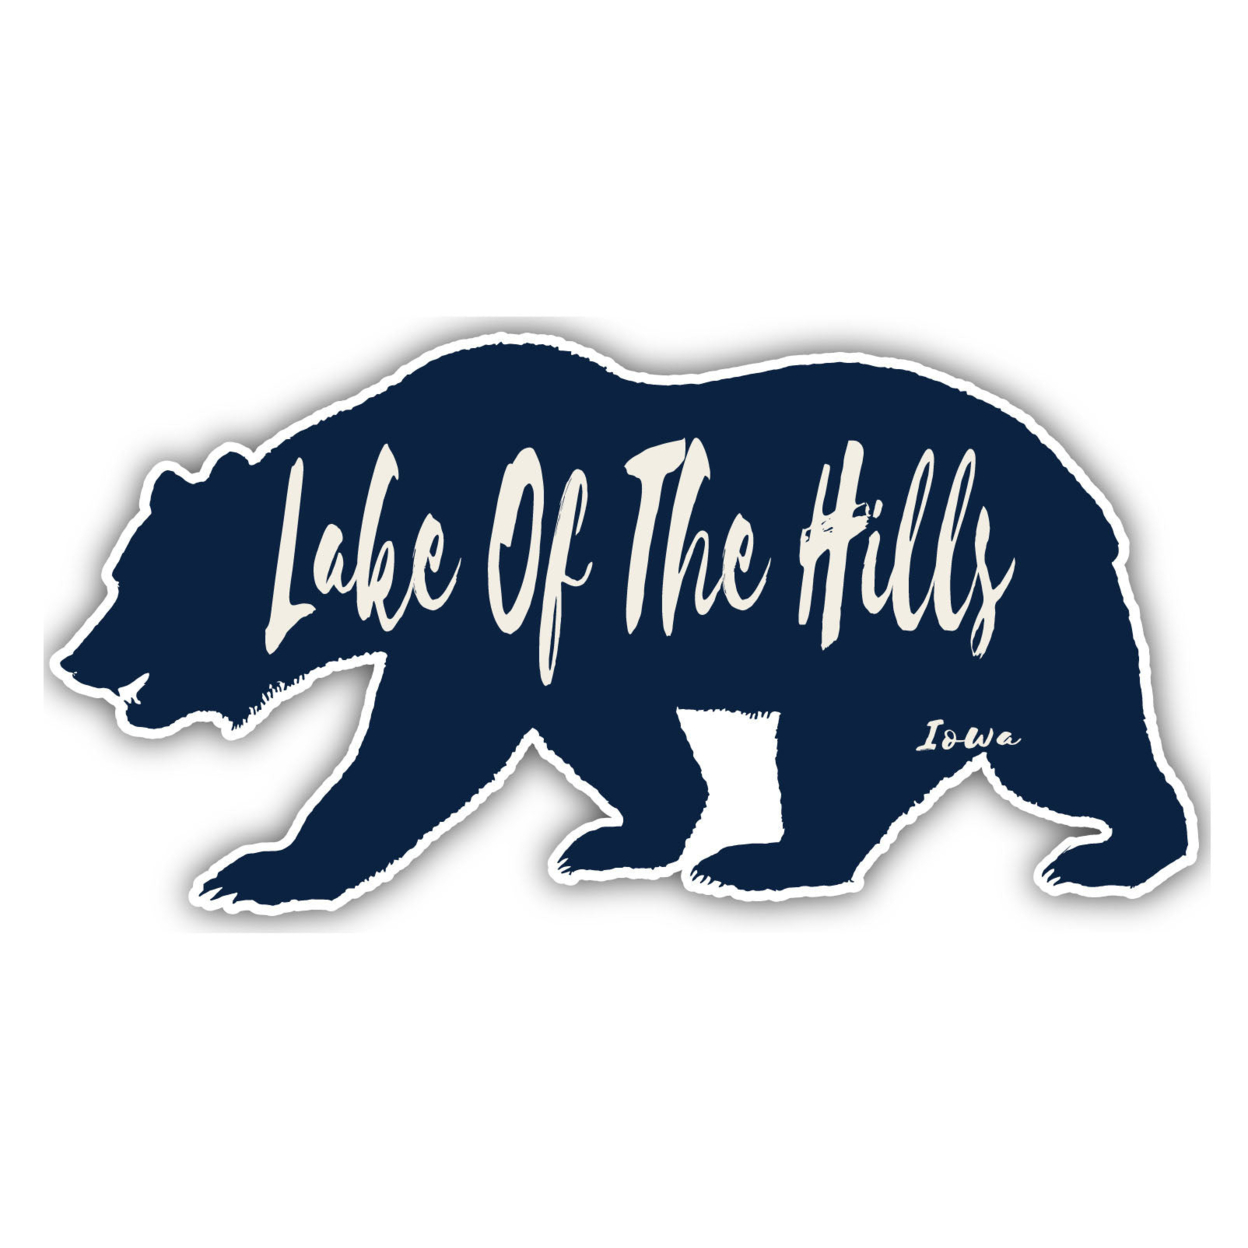 Lake Pend Oreille Idaho Souvenir Decorative Stickers (Choose Theme And Size) - 2-Inch, Bear